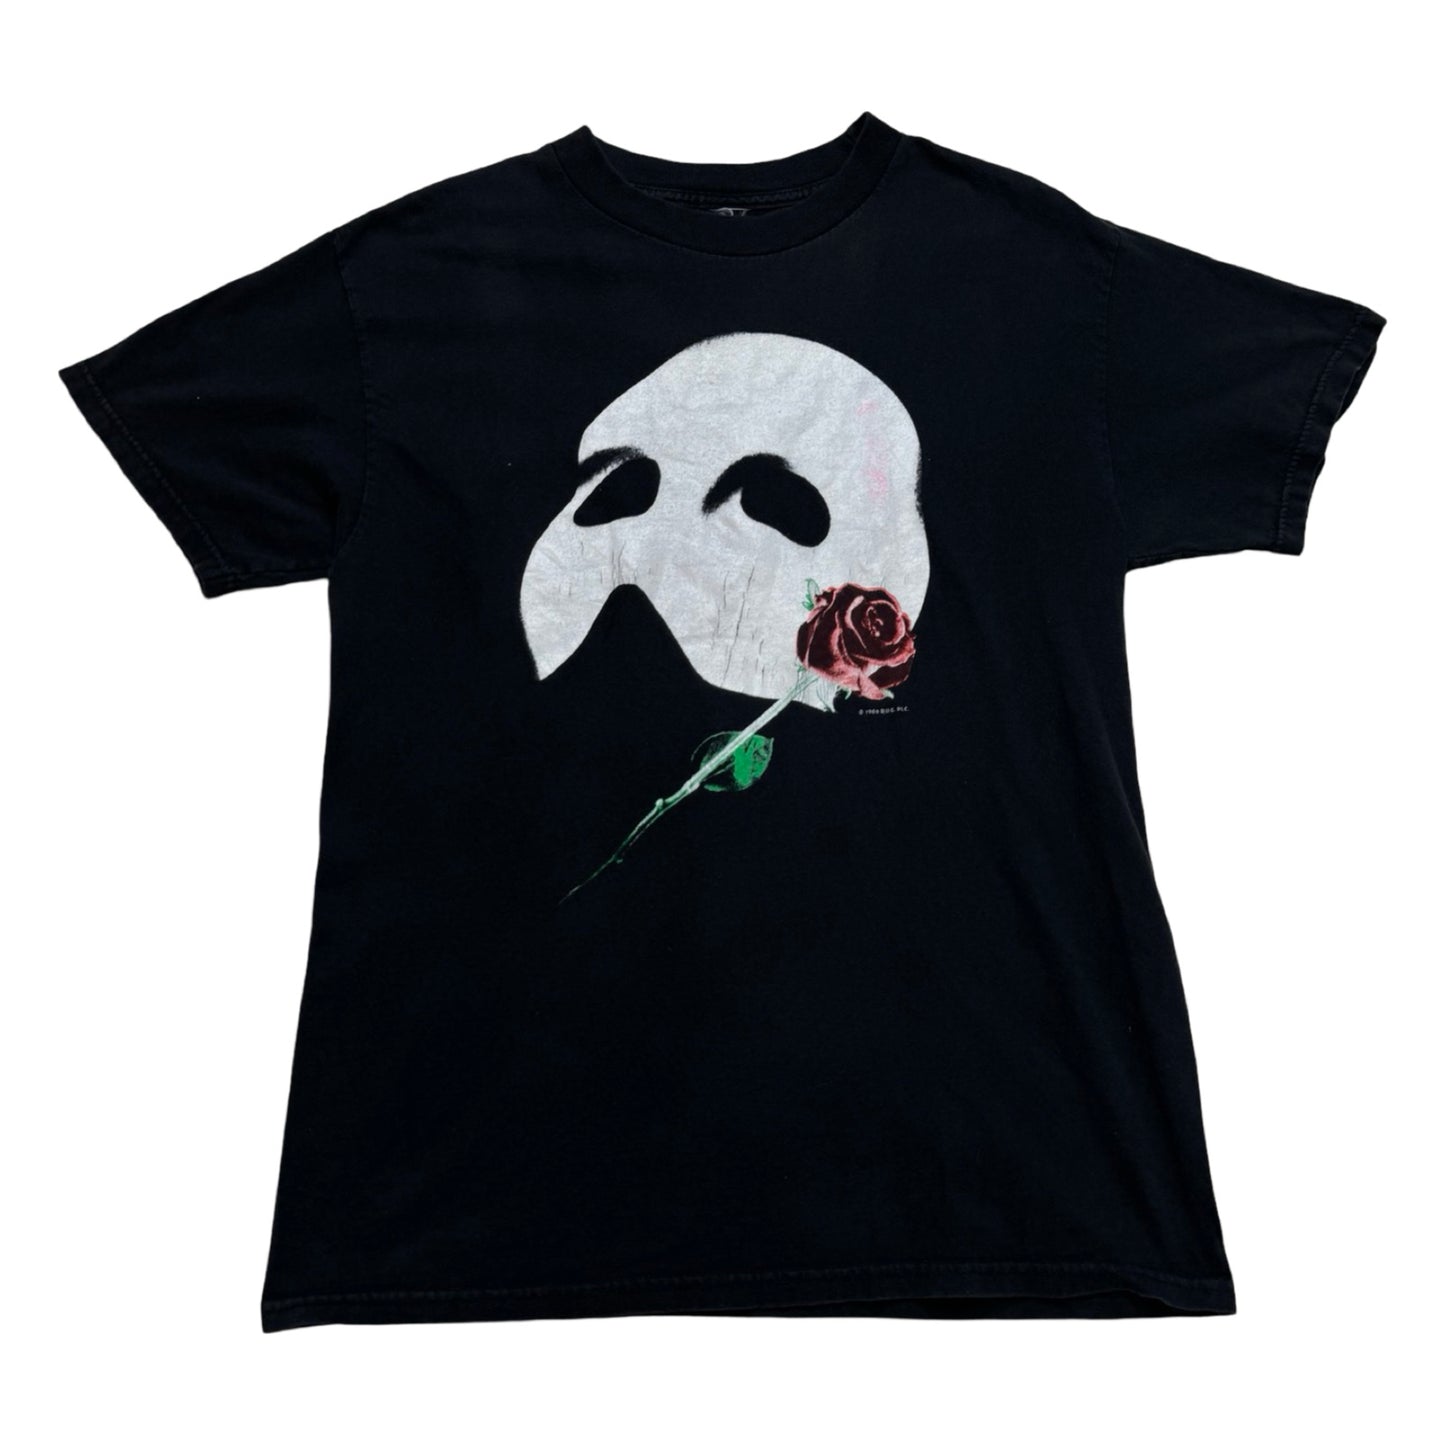 Vintage 1986 Phantom of the Opera Shirt Size L